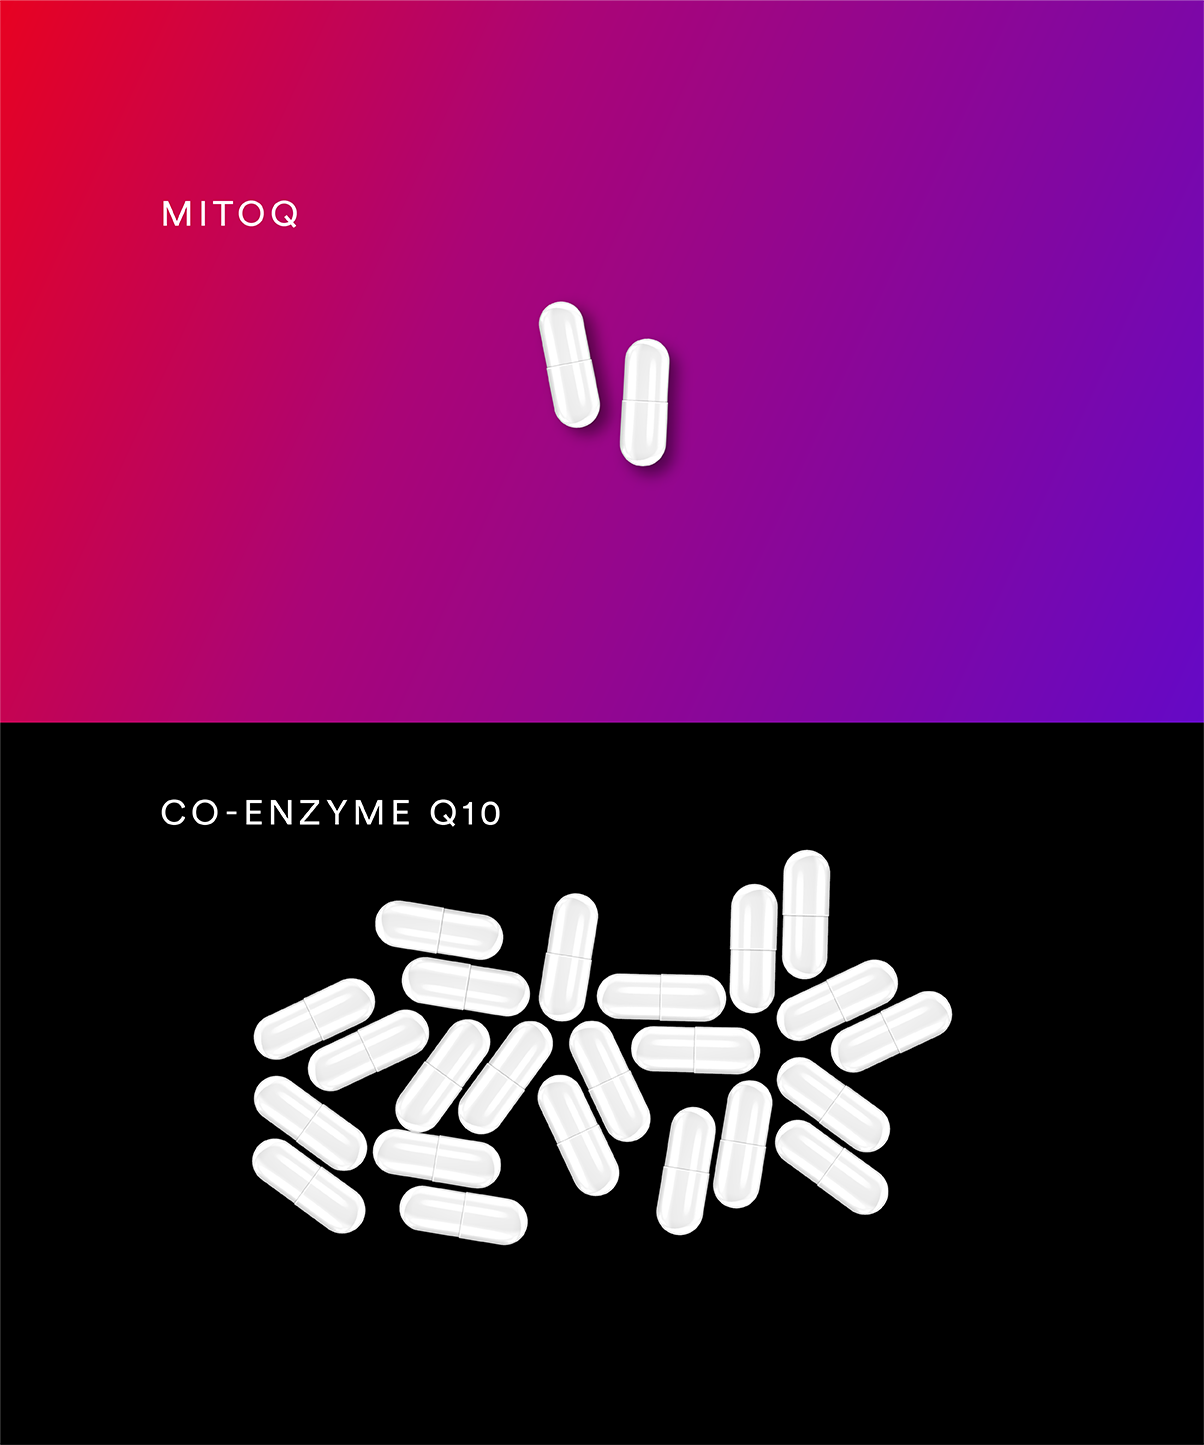 MitoQ smaller dose compared to co-enzyme Q10